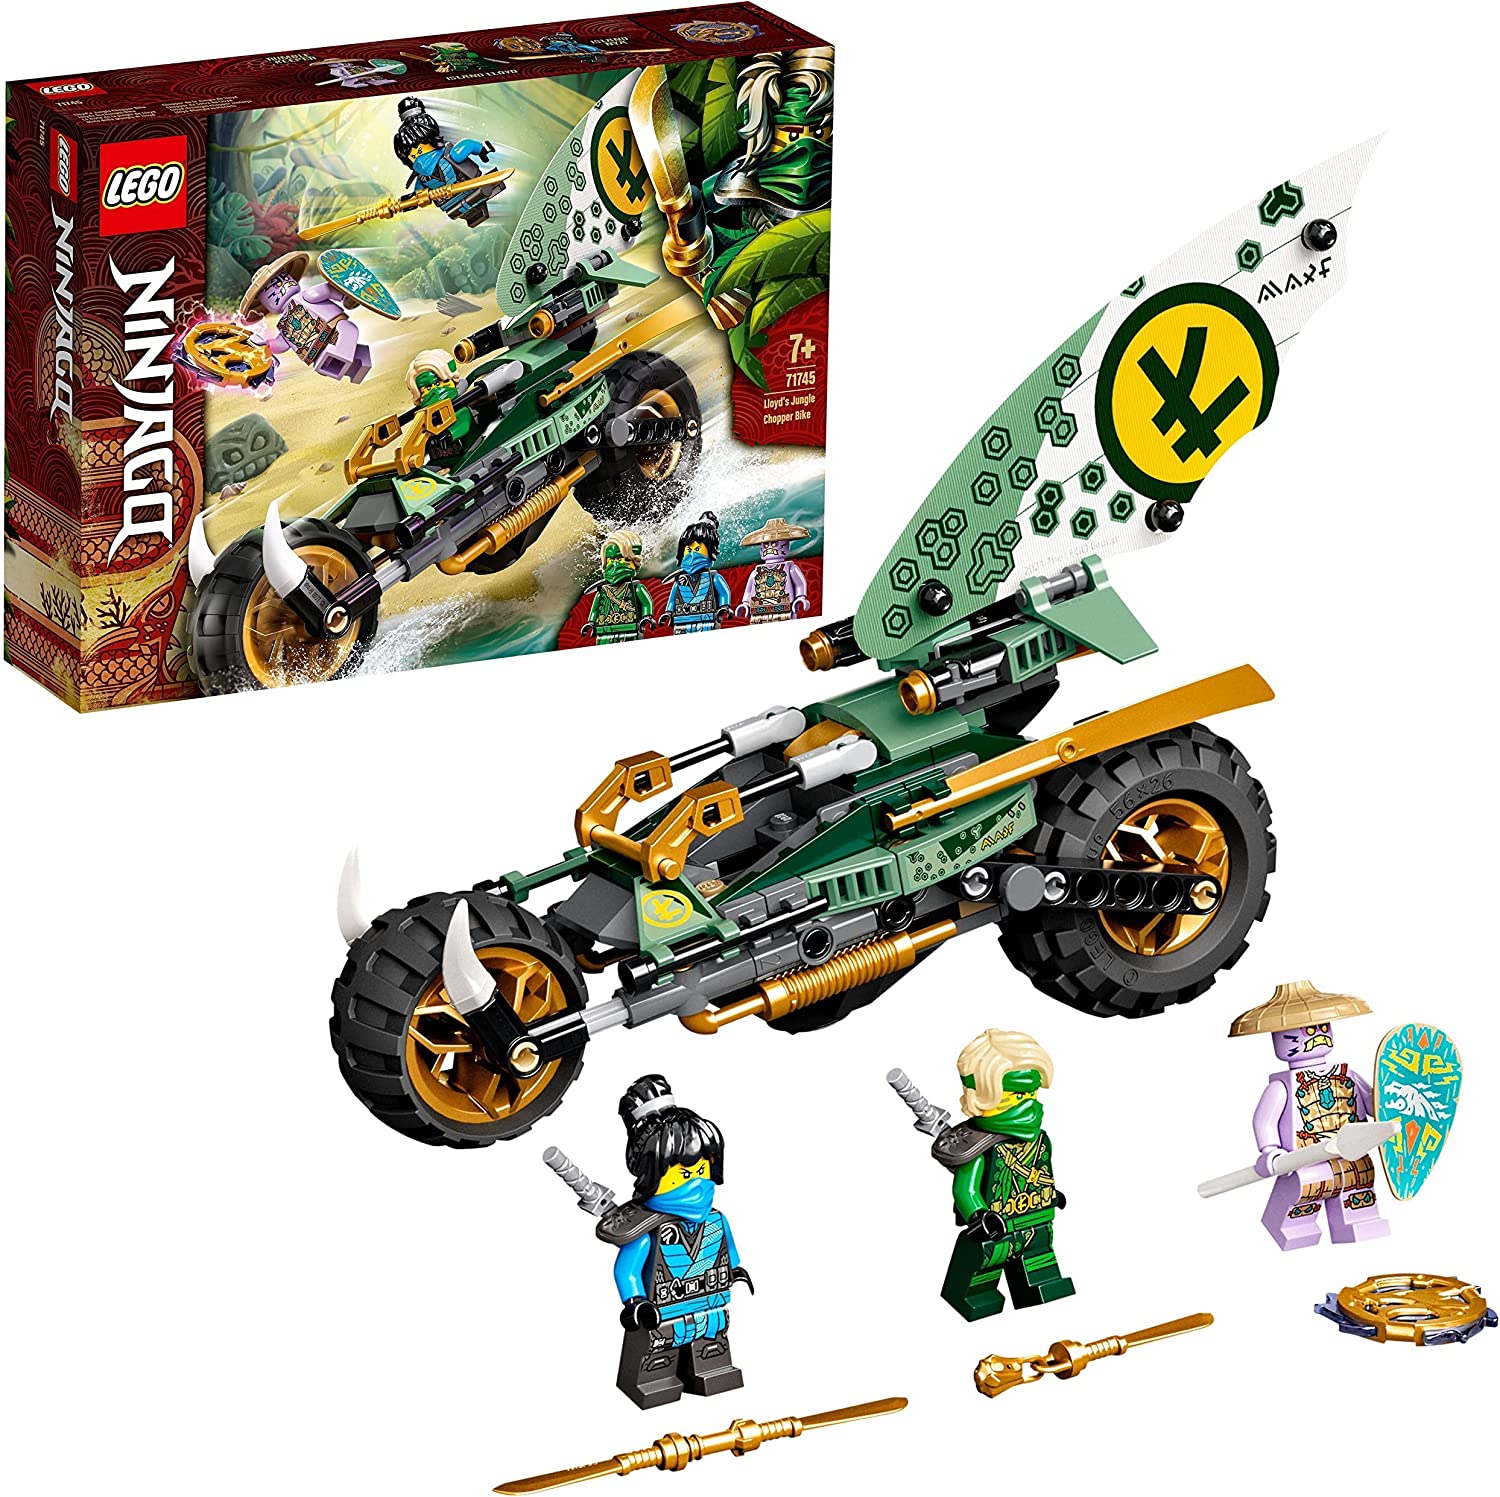 Lego 71745 Ninjago Lloyds Jungle Bike Construction Kit, Toy Motorcycle with Lloyd and Nya Mini Figures